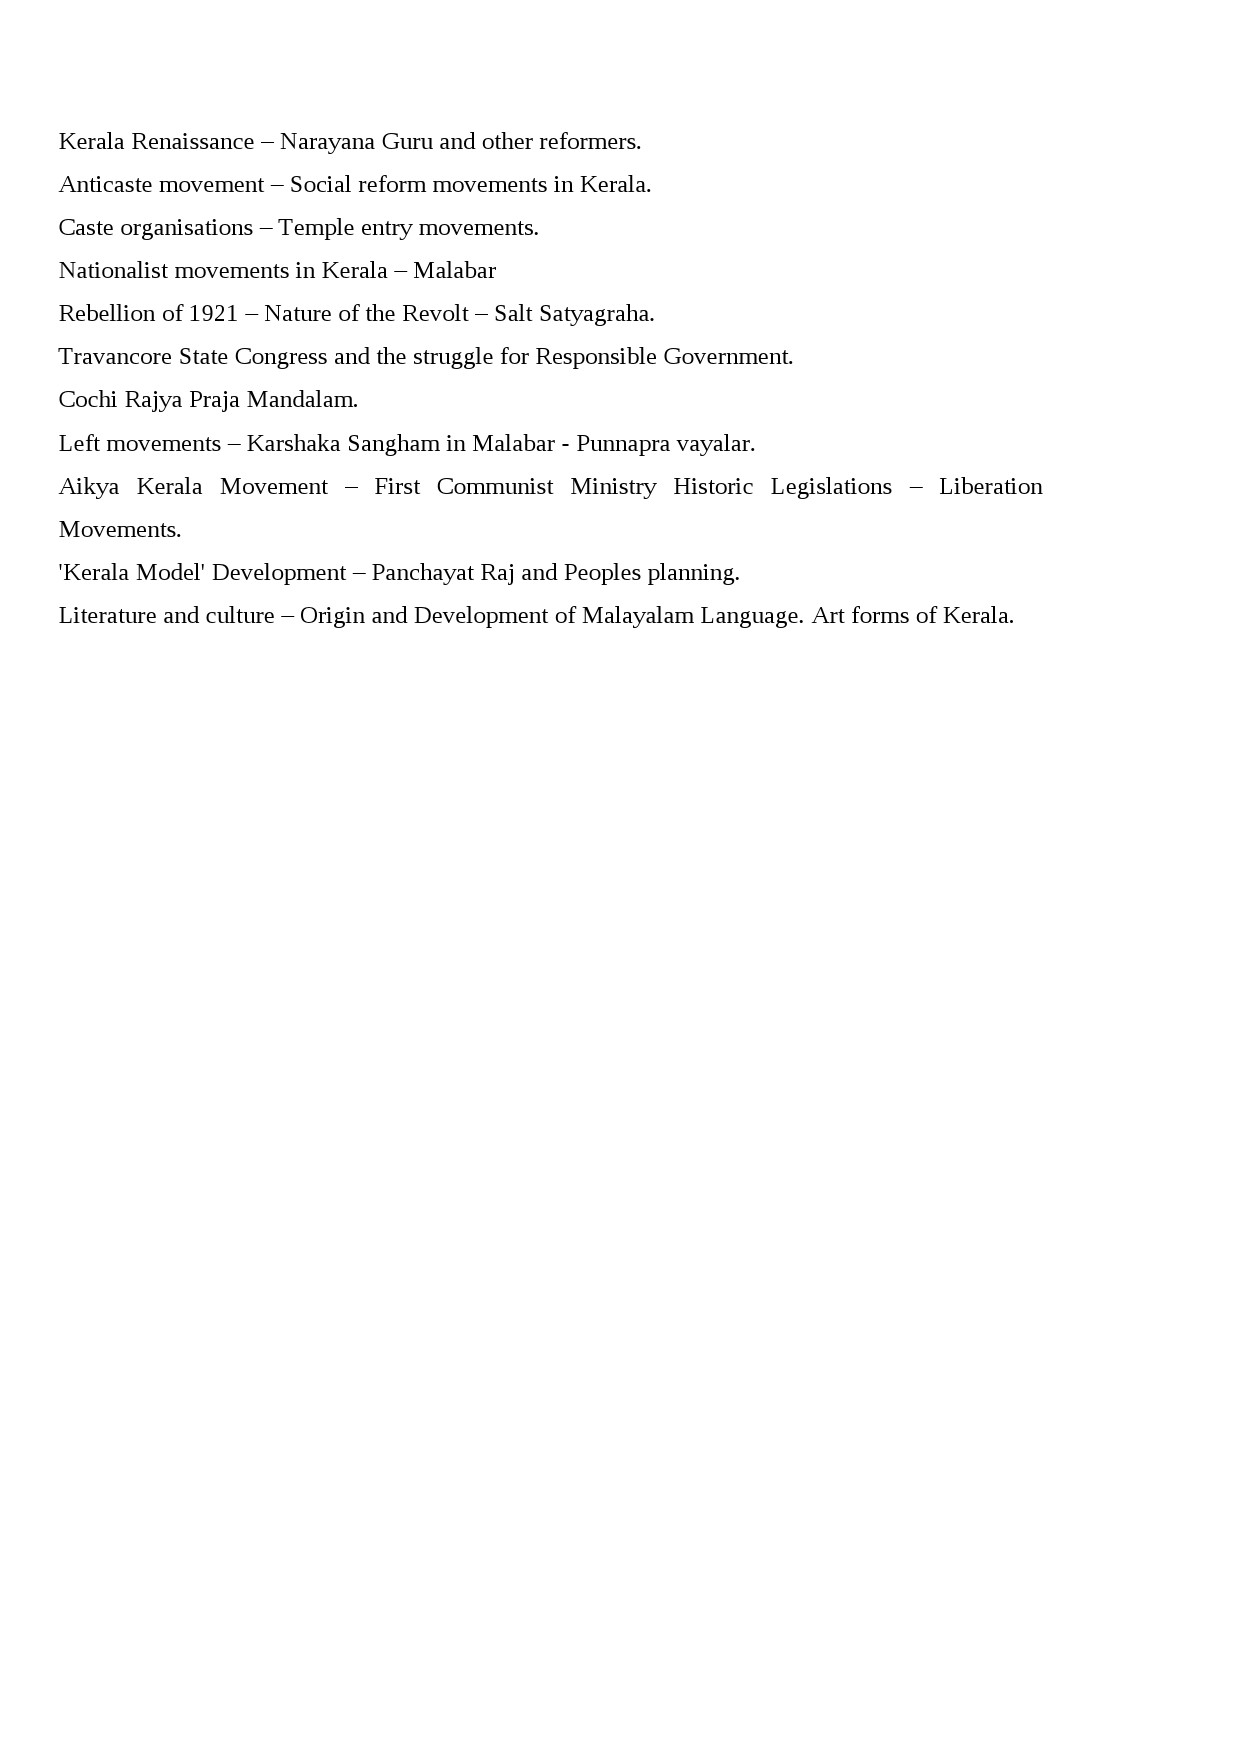 Humanities Syllabus for Kerala PSC 2021 Exam - Notification Image 40